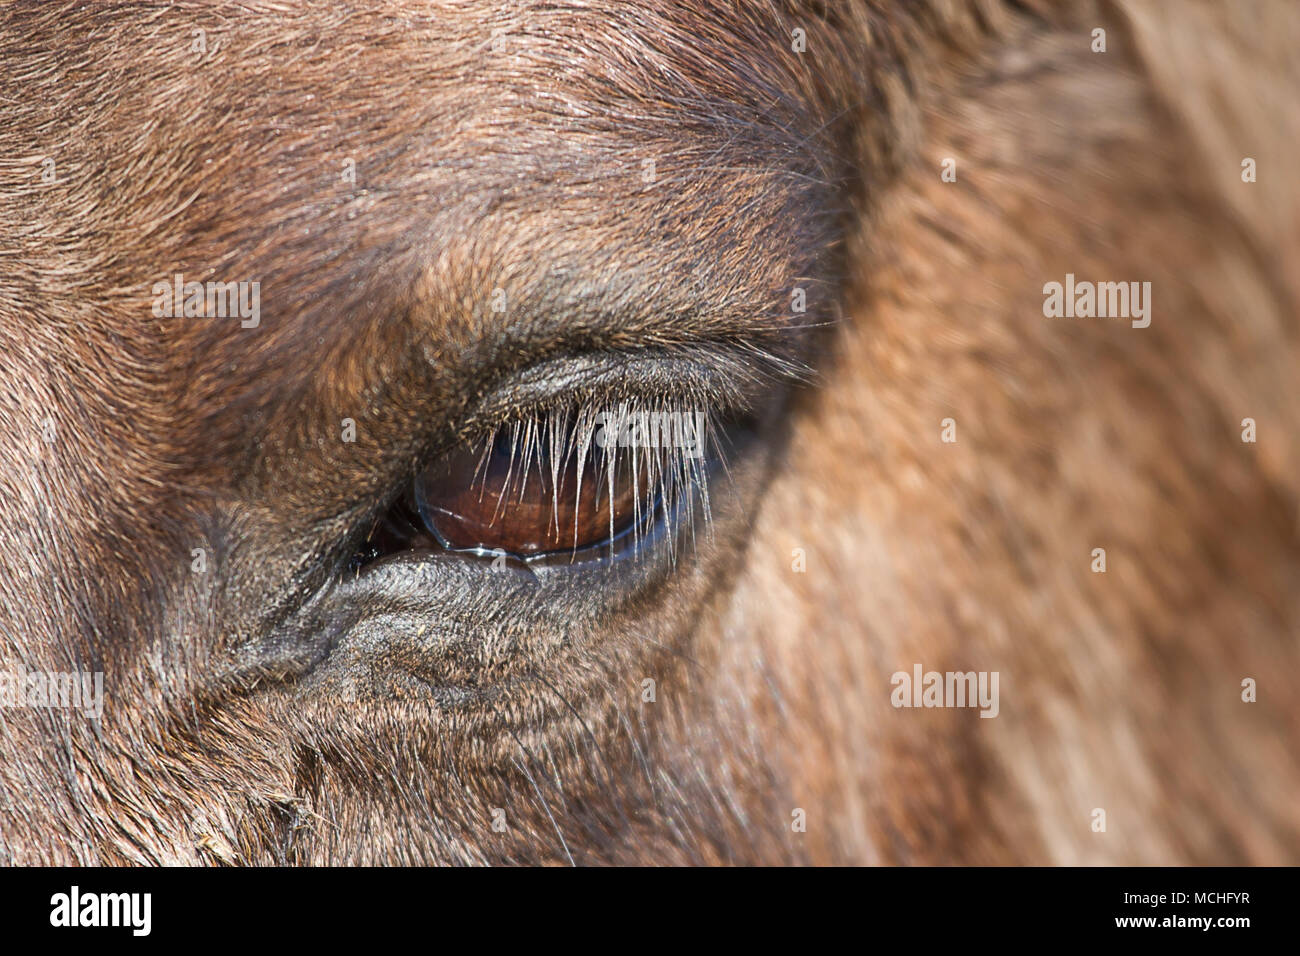 Close-up photo study of a Konik Wild horses eye Stock Photo